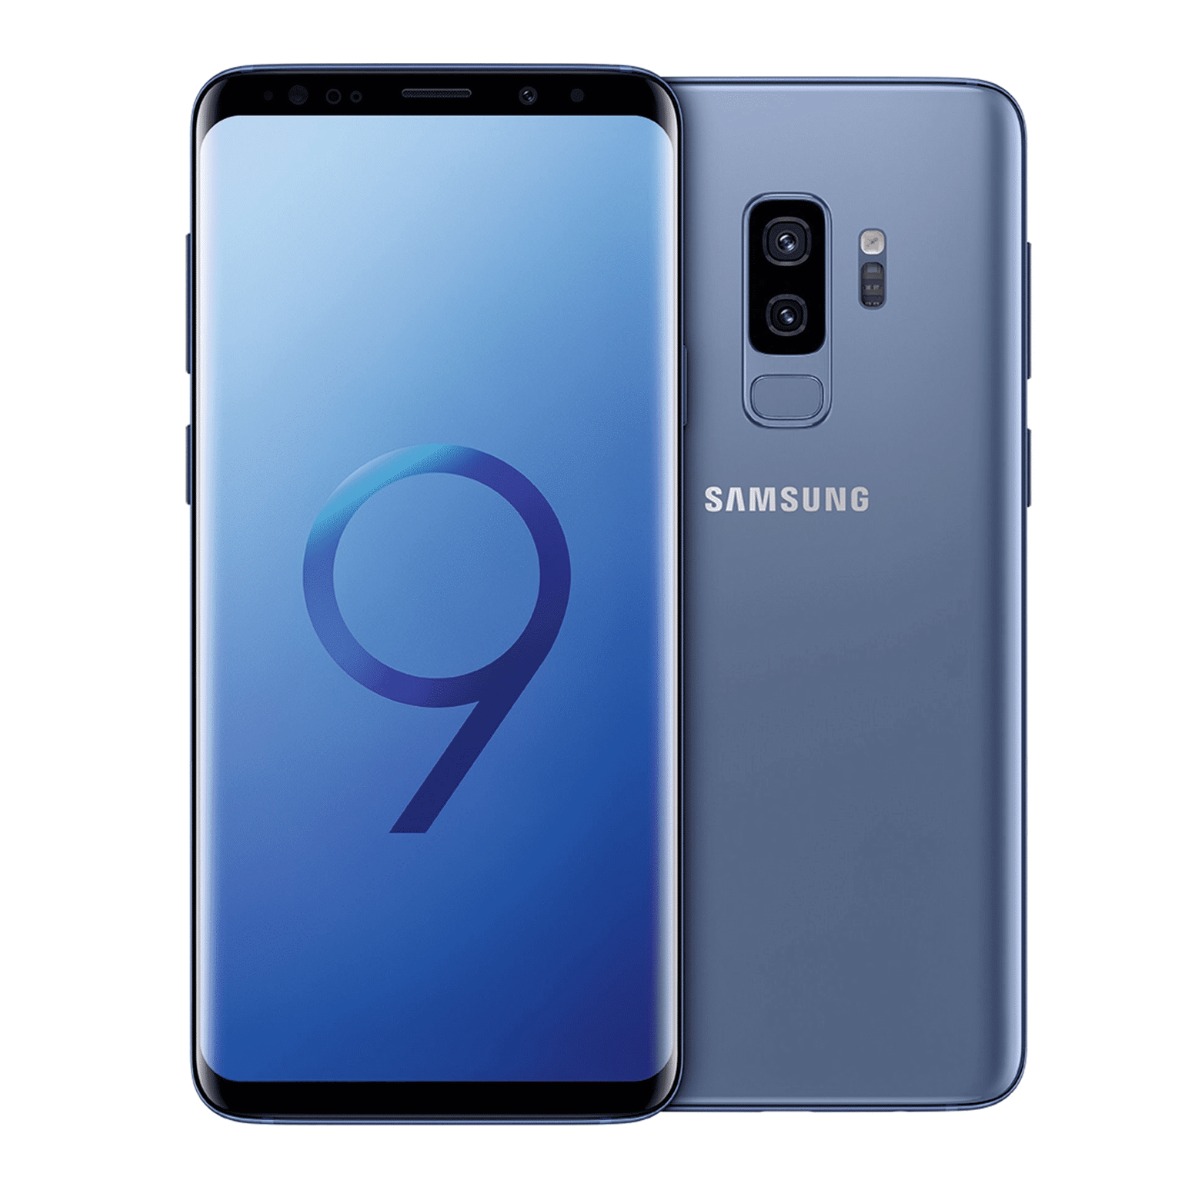 Sim Free Samsung Galaxy S9+ Plus 64GB Unlocked Mobile Phone - Coral Blue